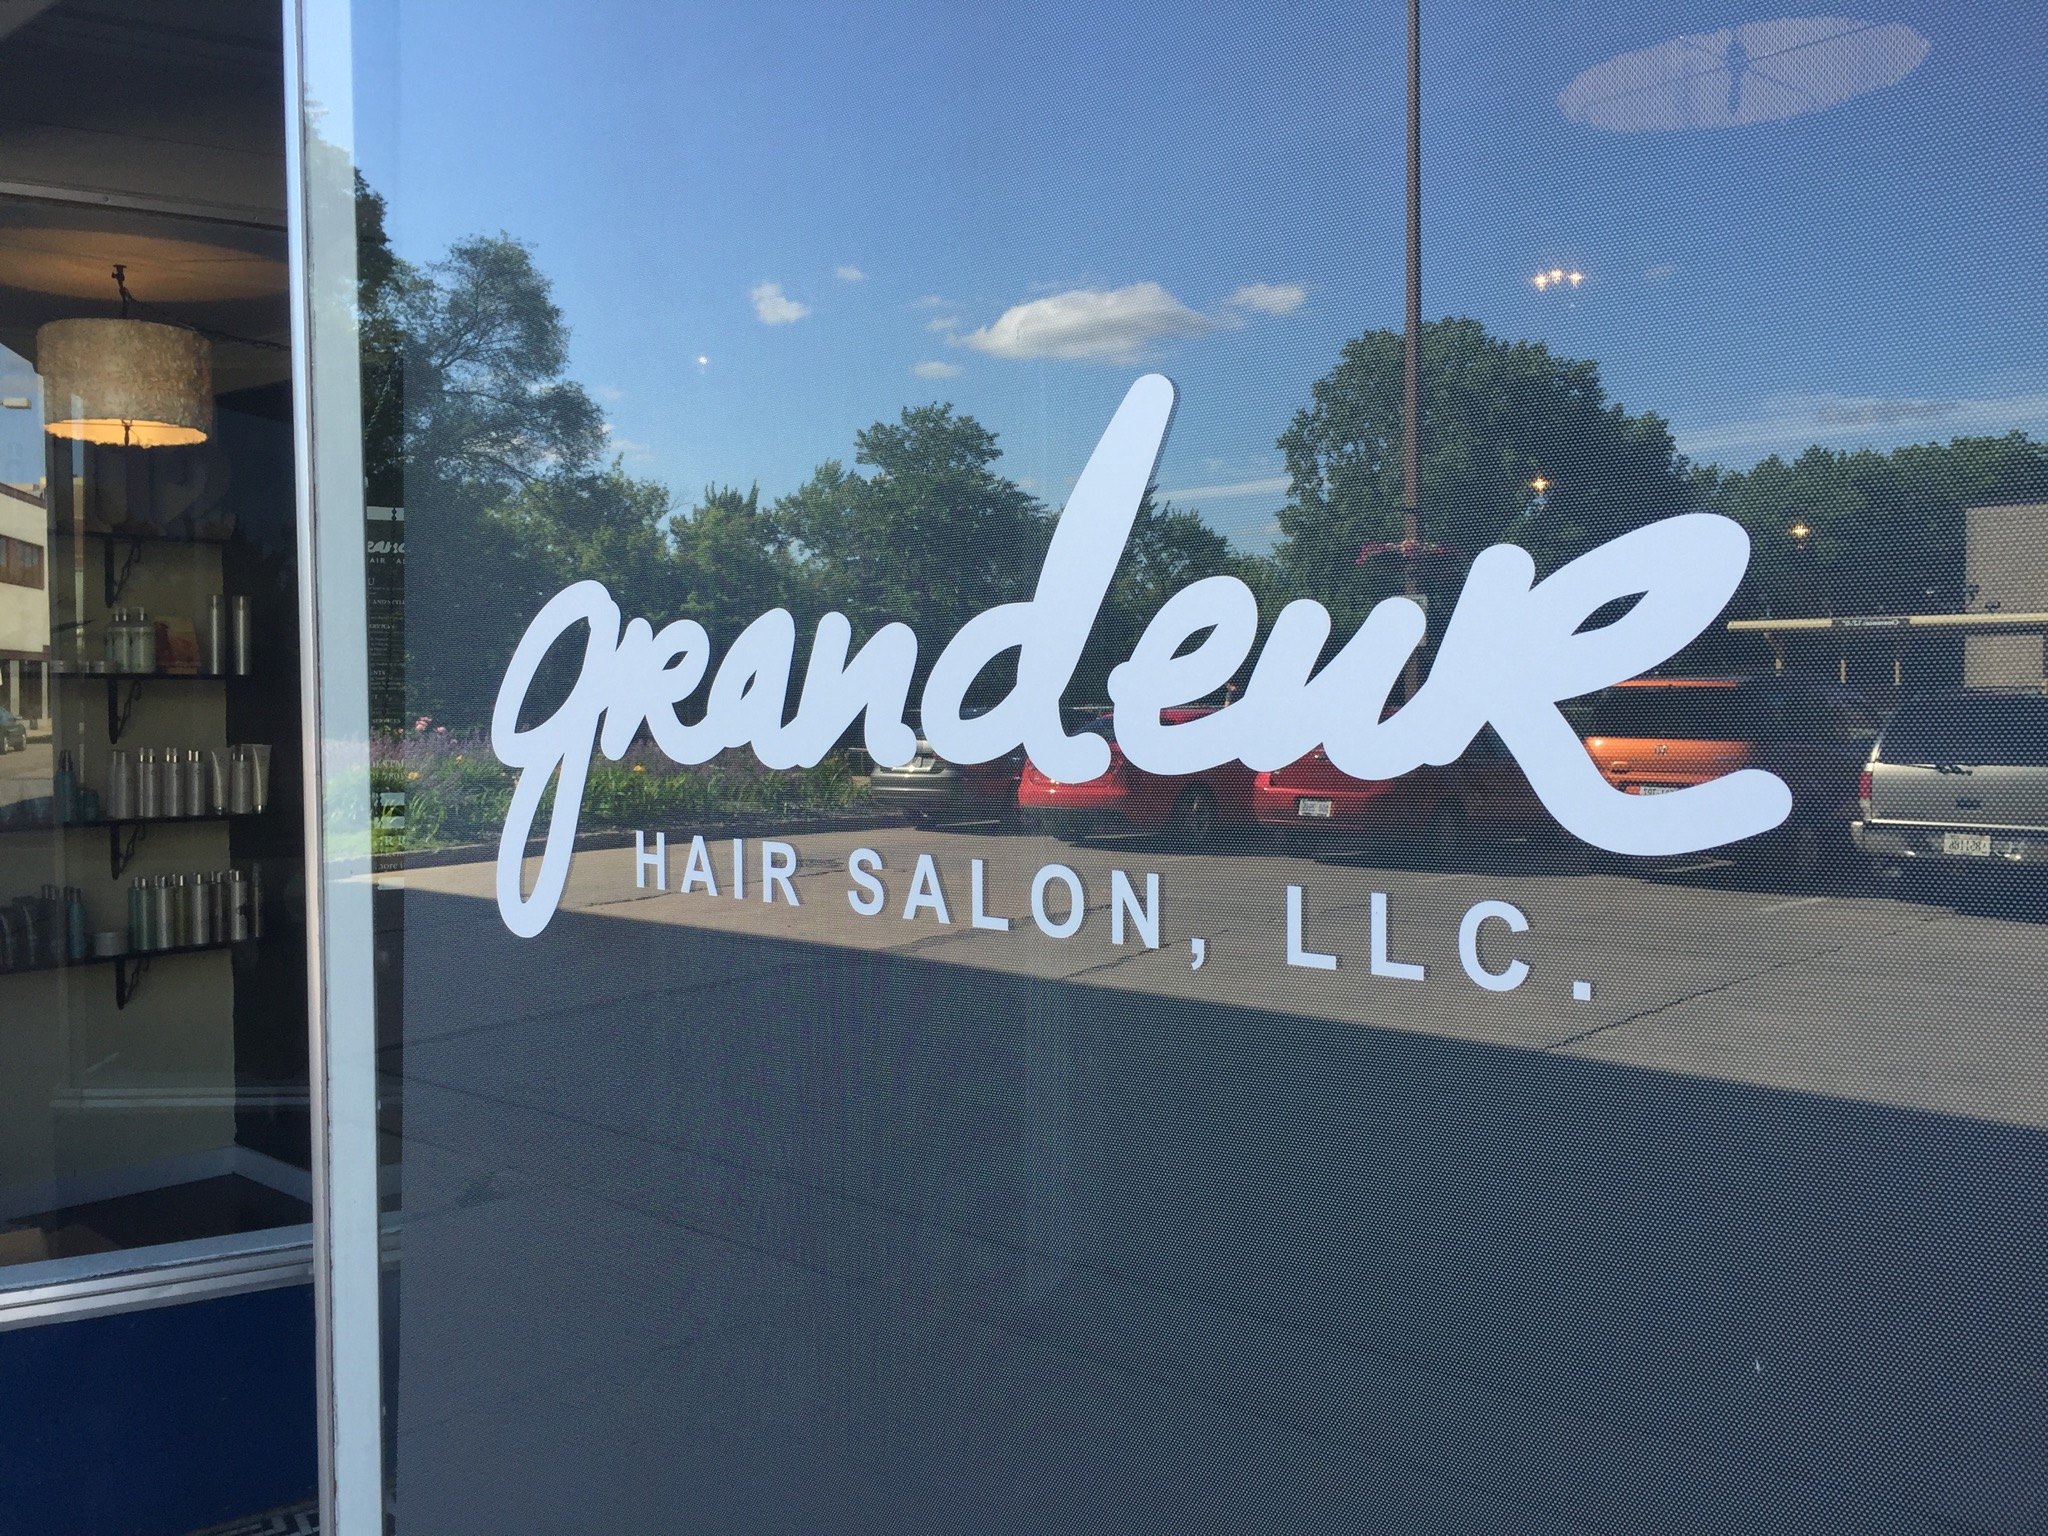 Grandeur Hair Salon, LLC